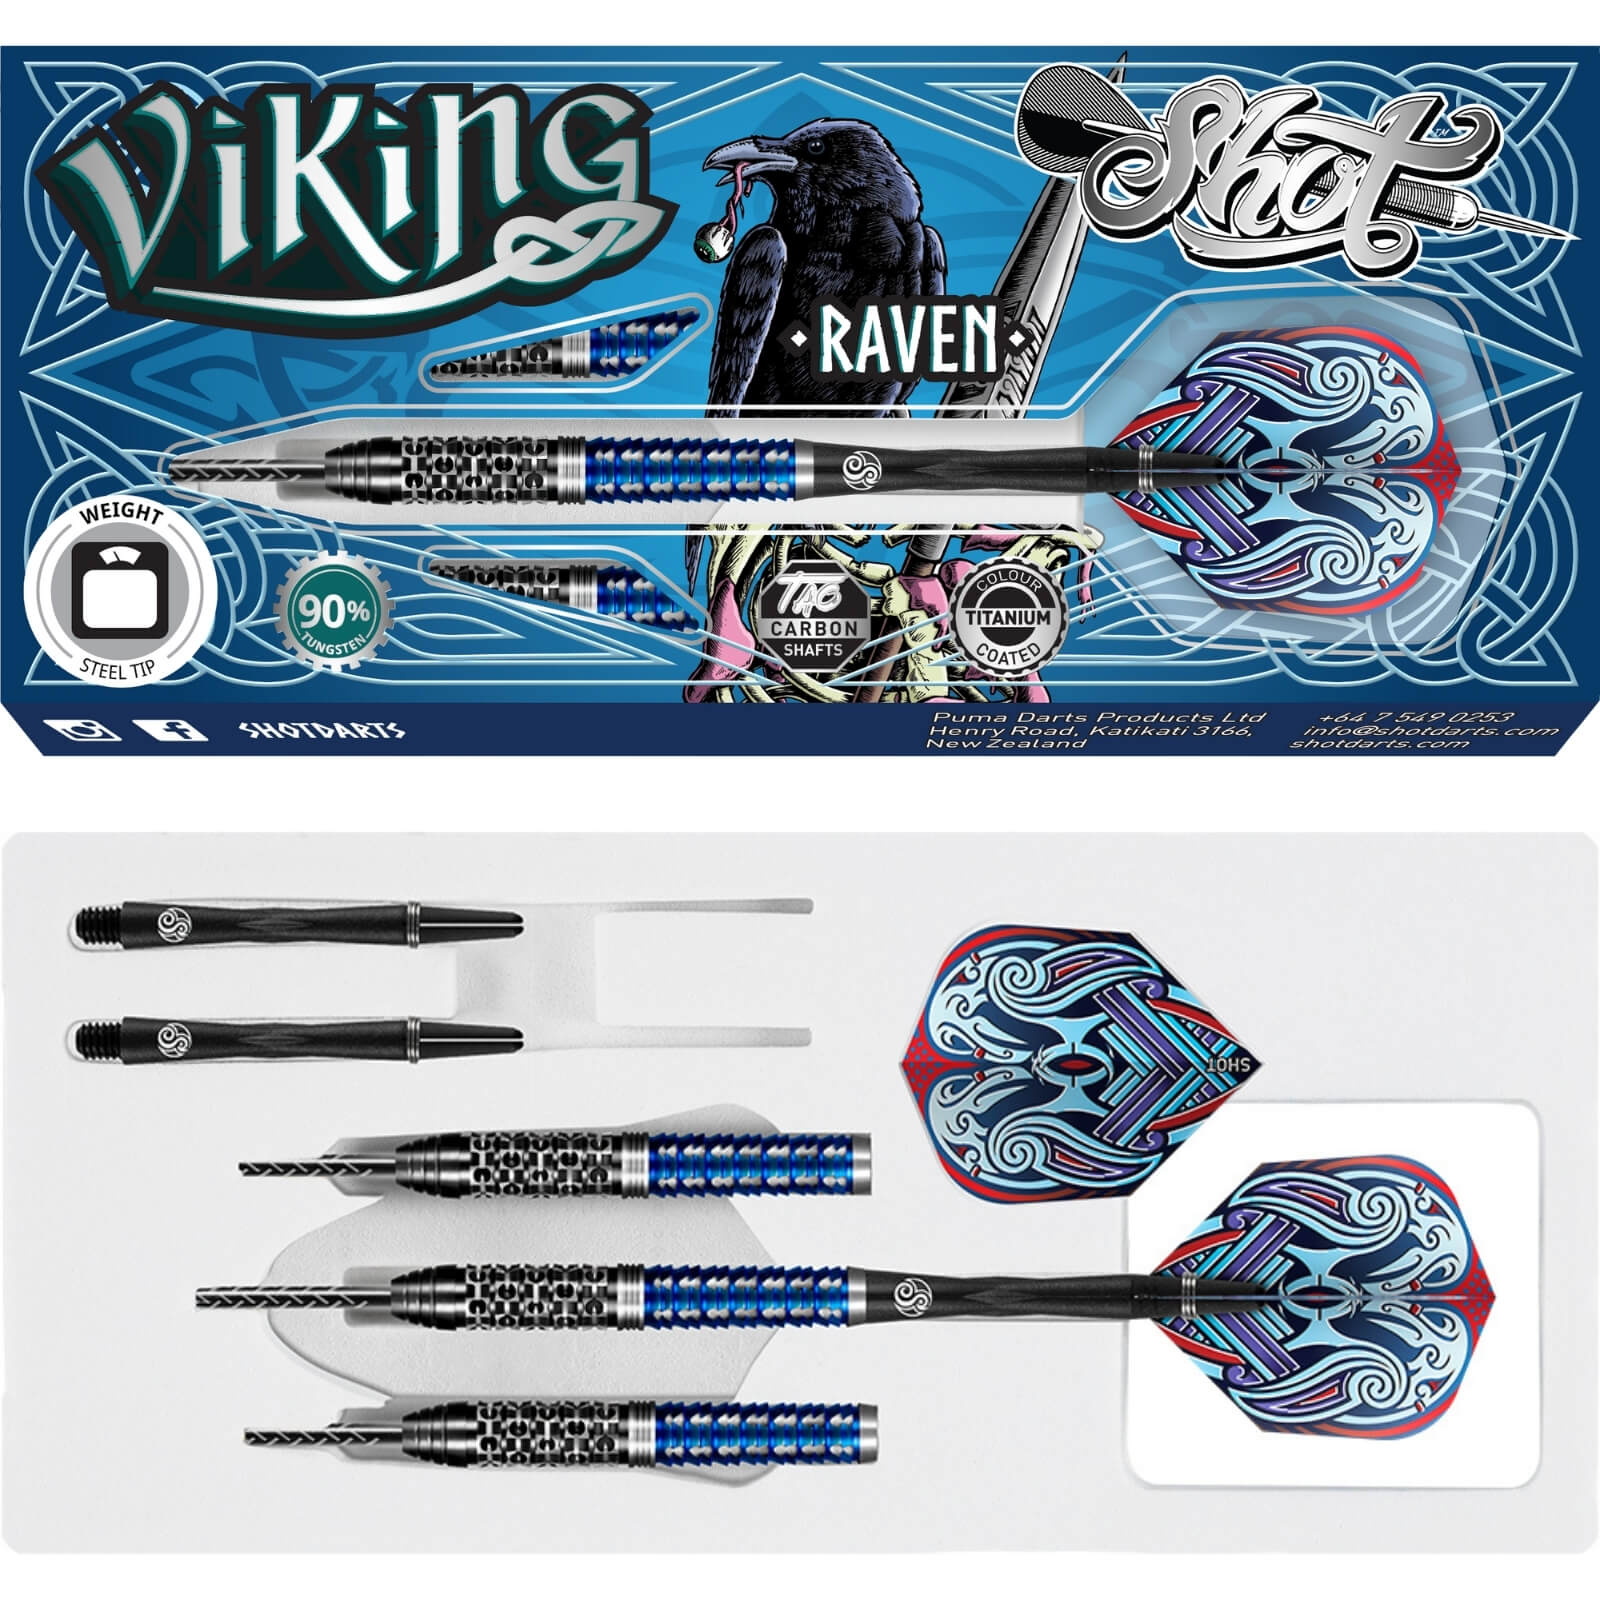 Shot Viking Raven Steel Tip Darts For Sale | Avid Darts Shop Australia